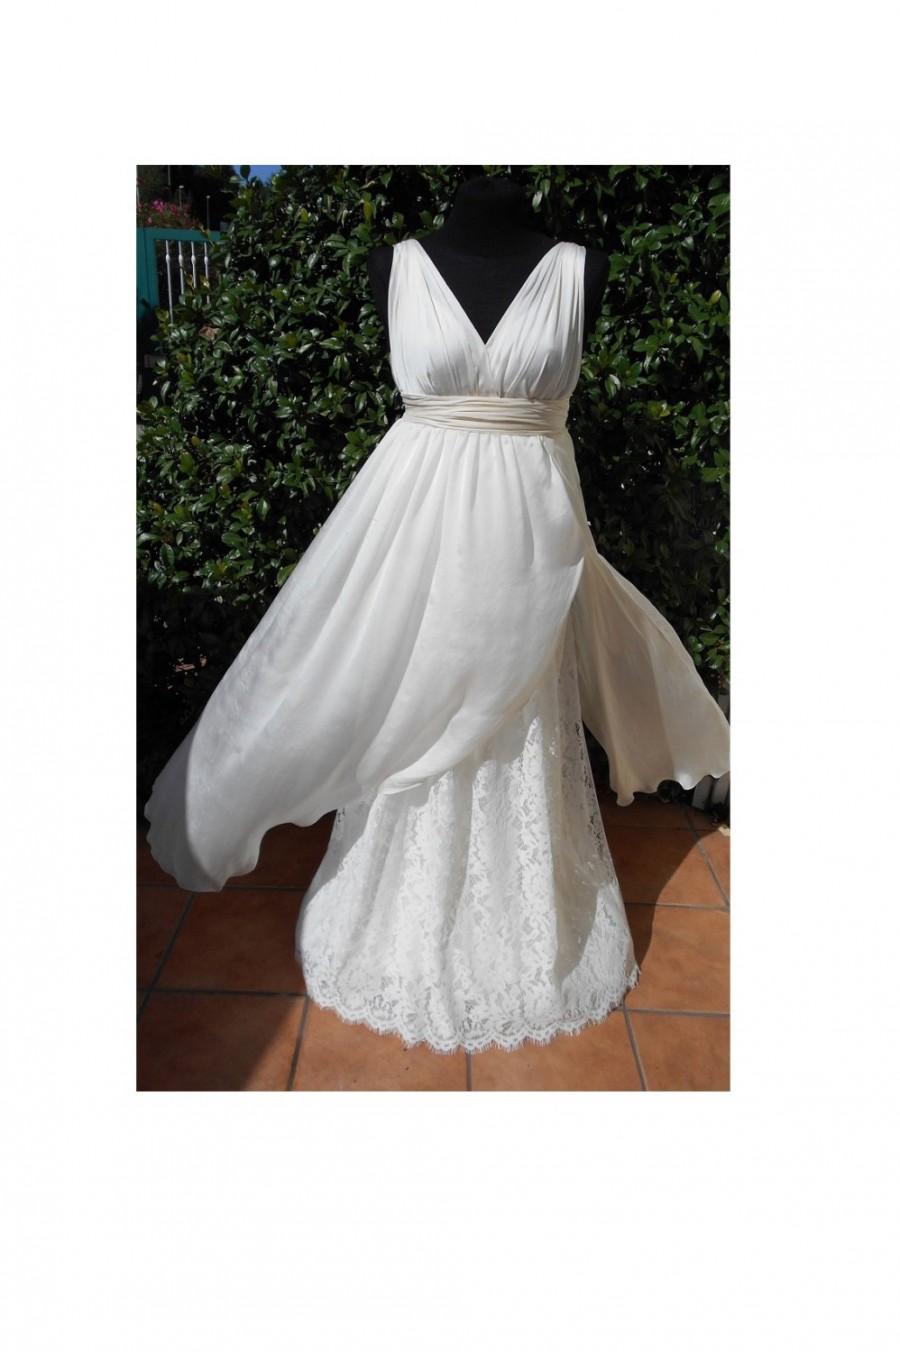 زفاف - Wedding  Boho dress in ivory  silk chiffon and lace